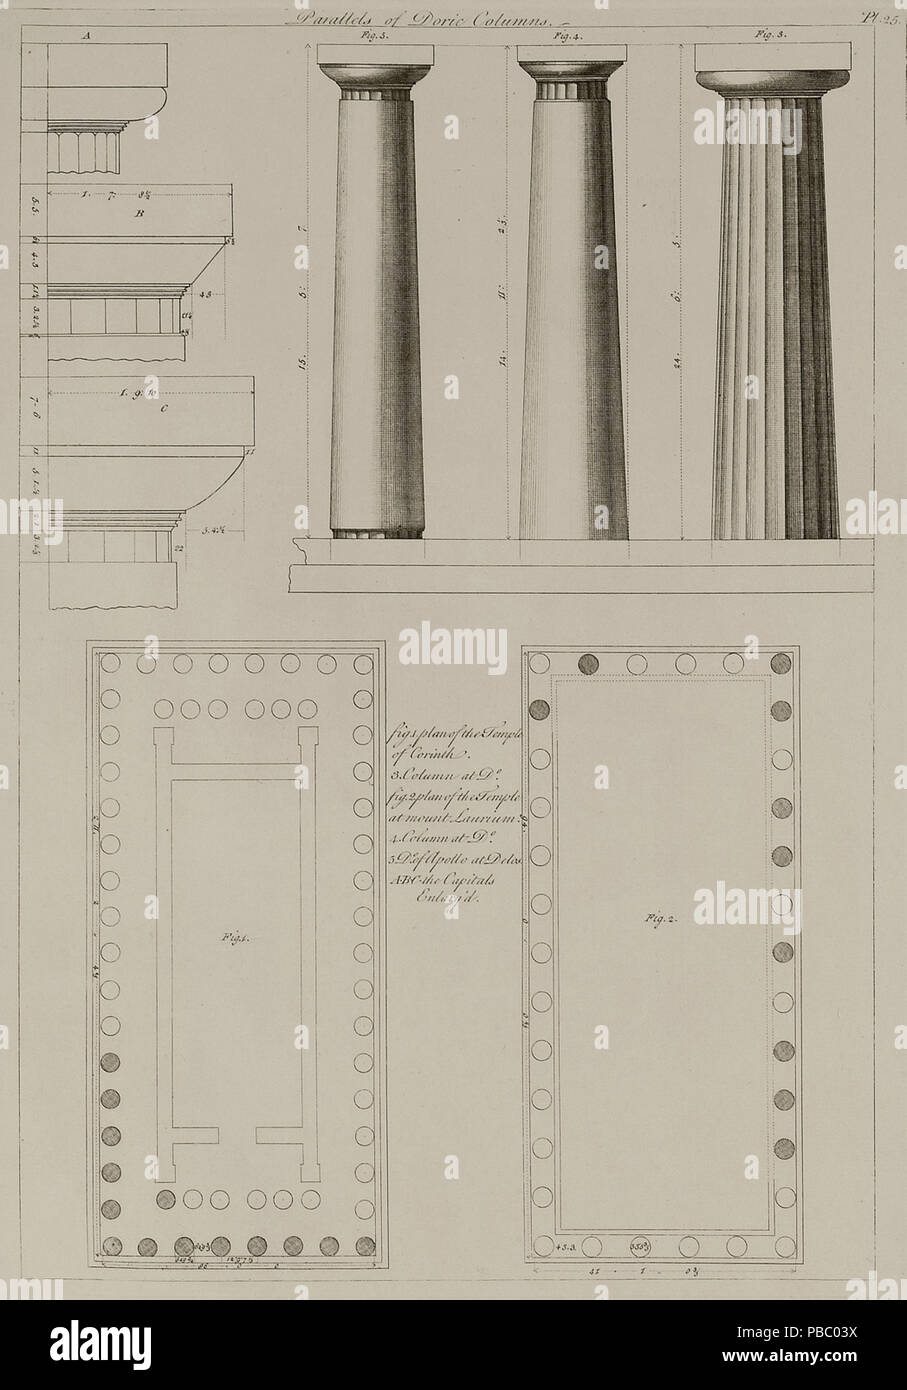 1168 Parallels of Doric Columns - Sayer Robert - 1759 Stock Photo